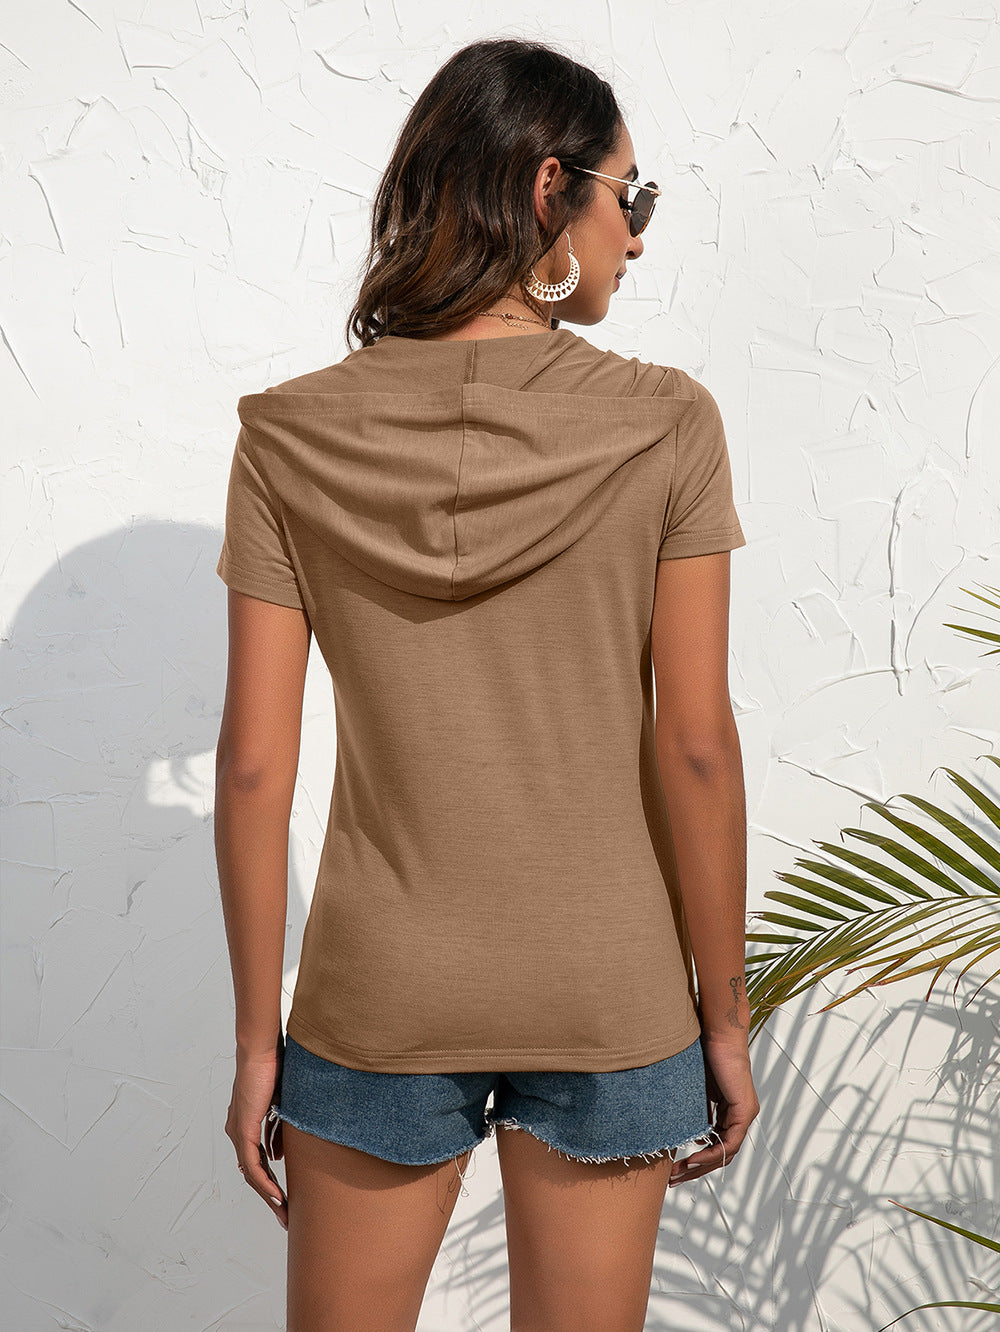 Amanda Half-Zip Short Sleeve Hooded Top- 1 size Large/Dark Gray left! FINAL SALE!